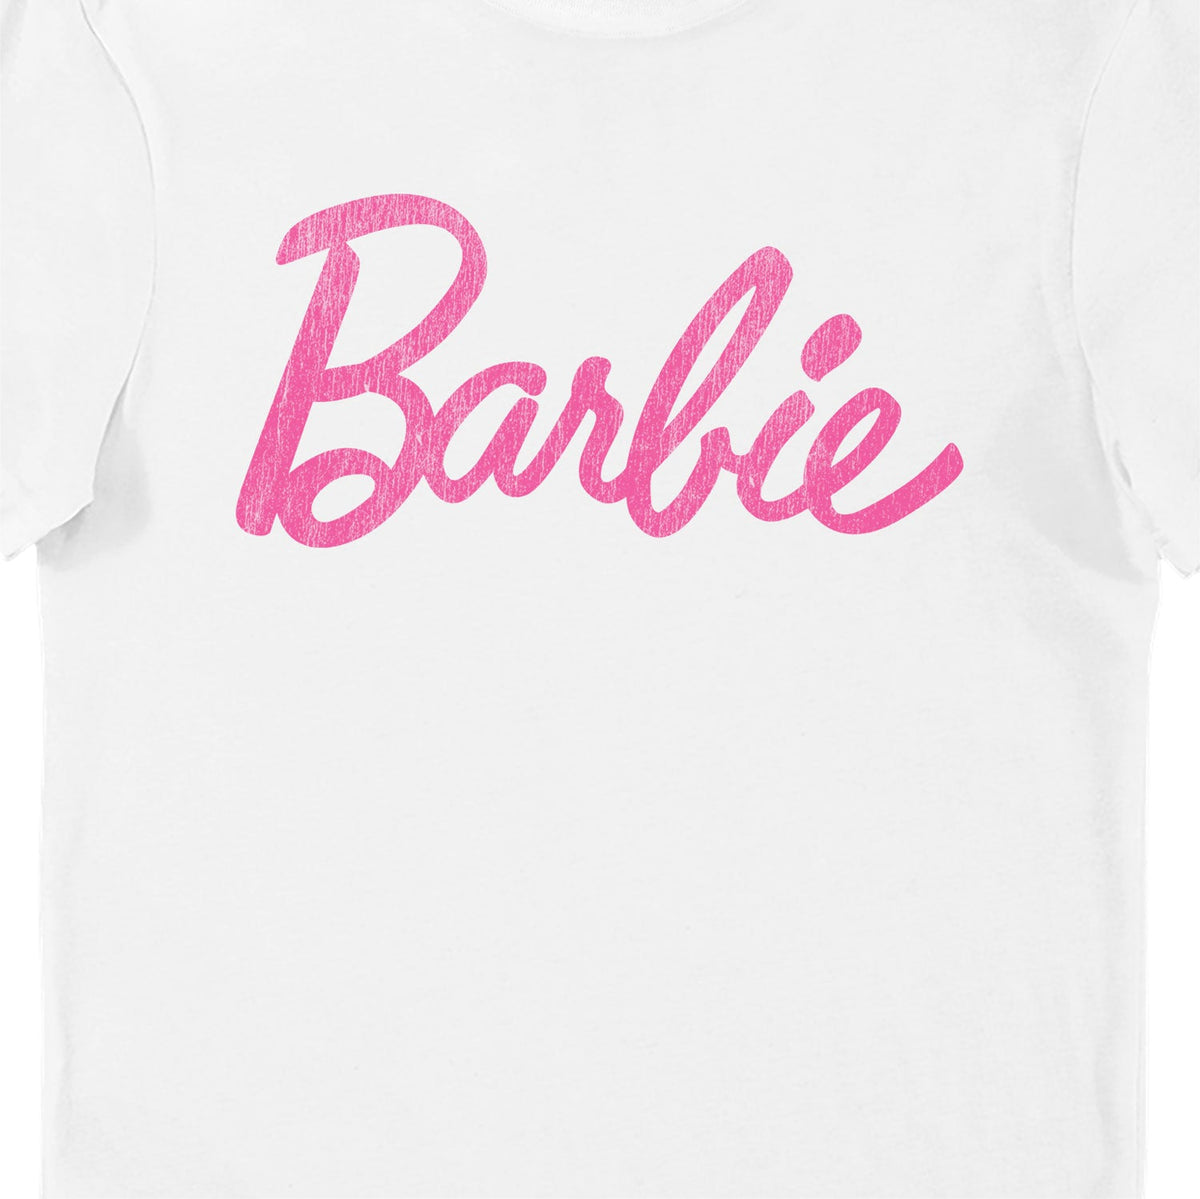 Barbie Logo Unisex T-Shirt